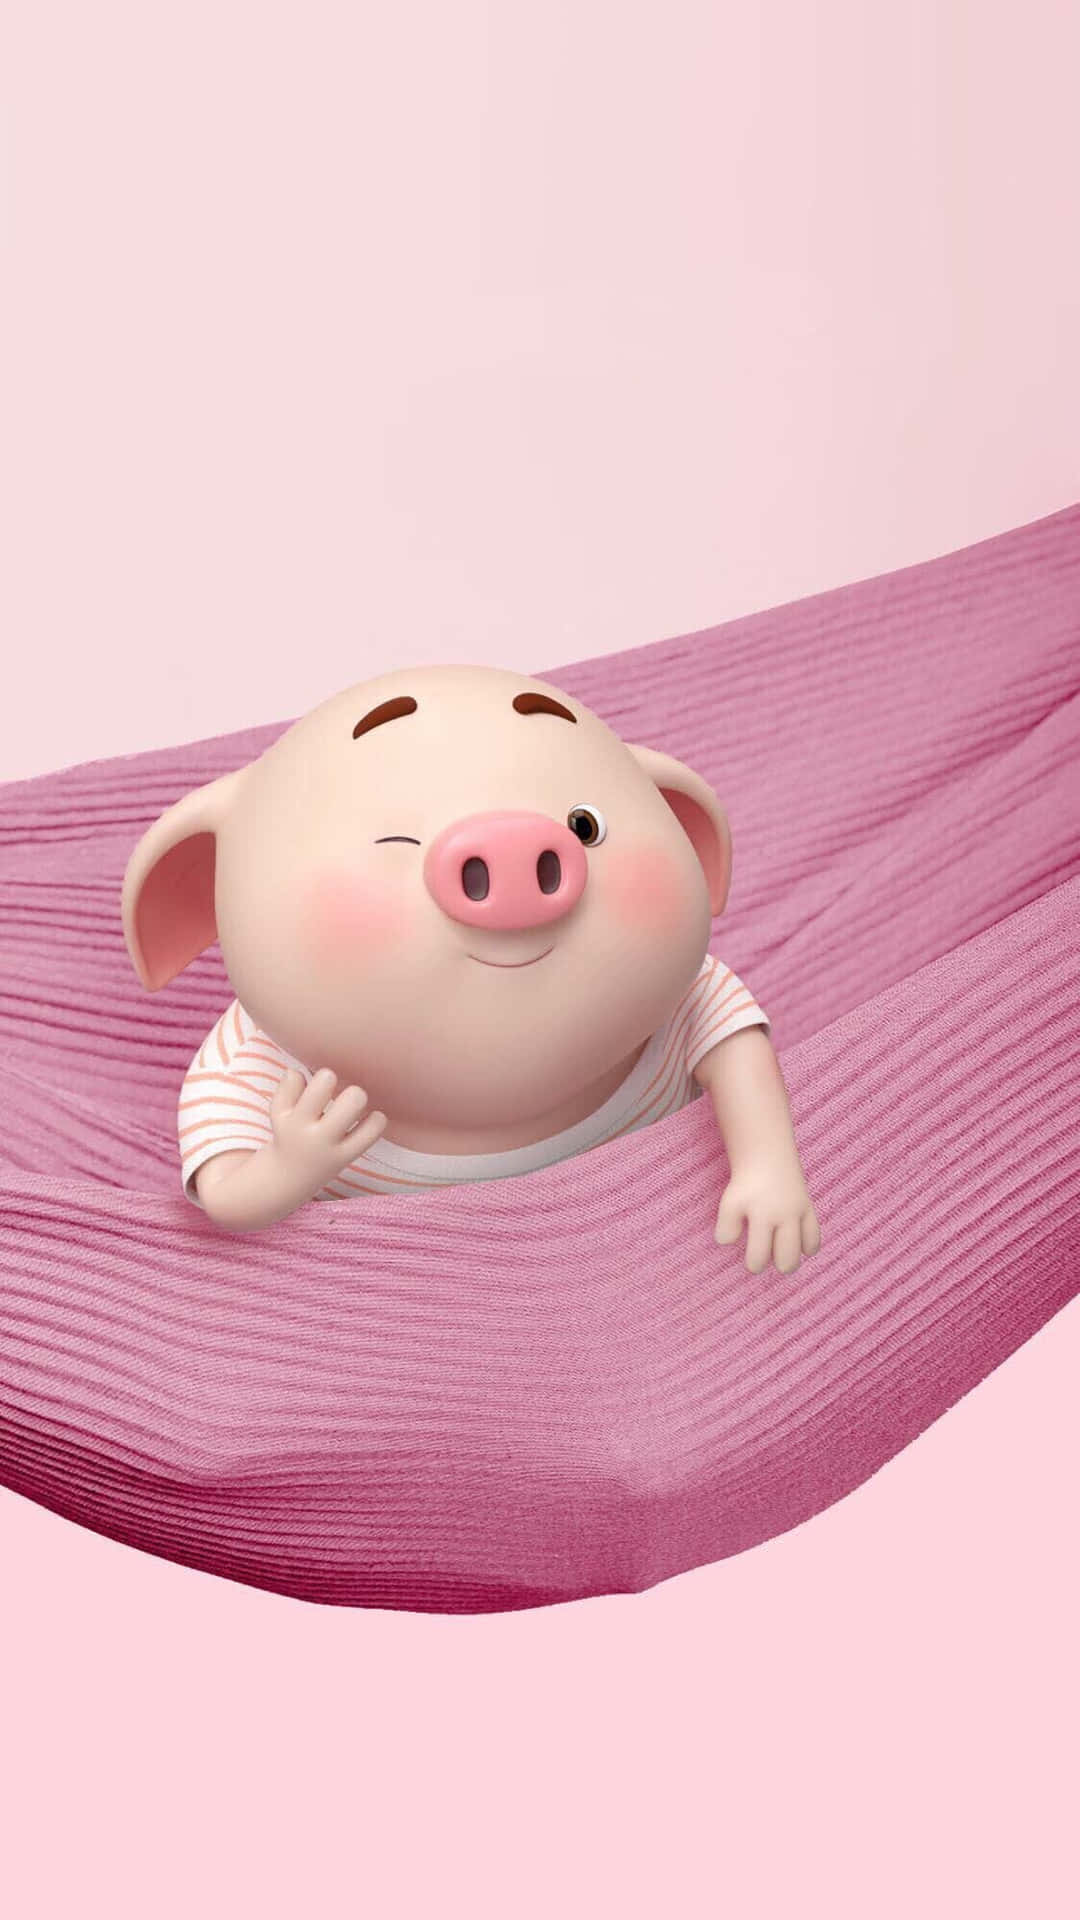 A Pig In A Hammock